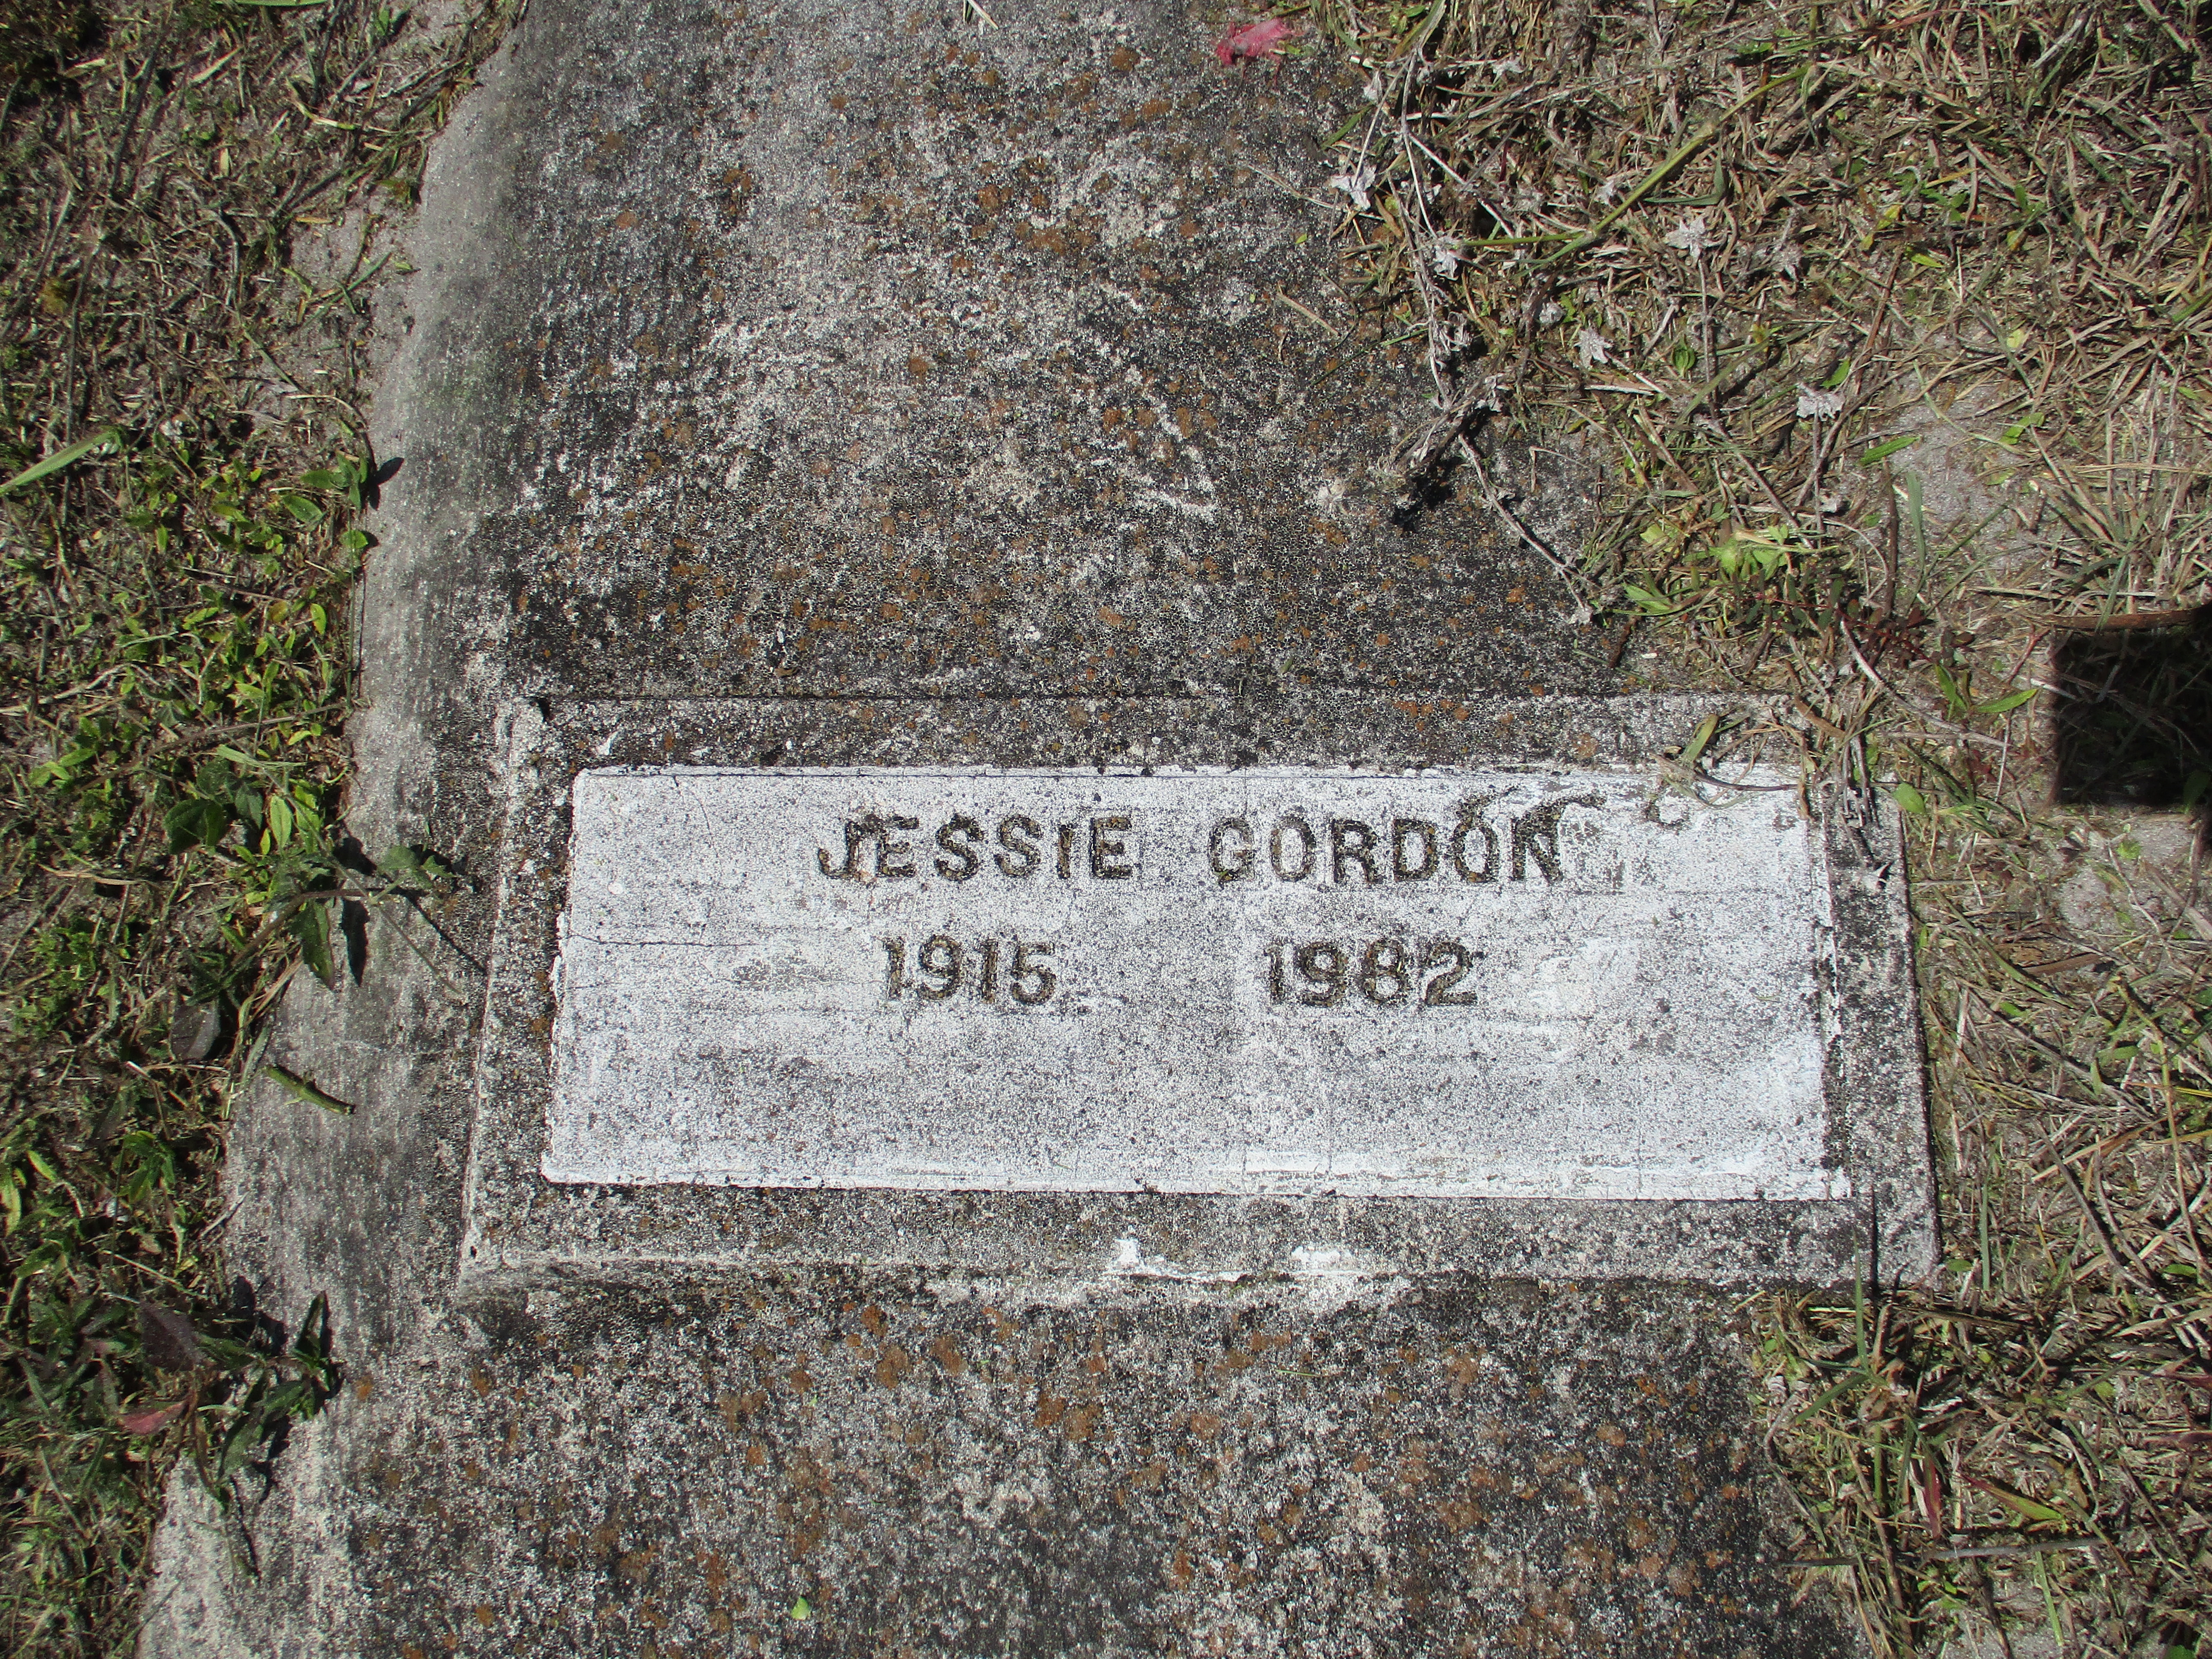 Jessie Gordon